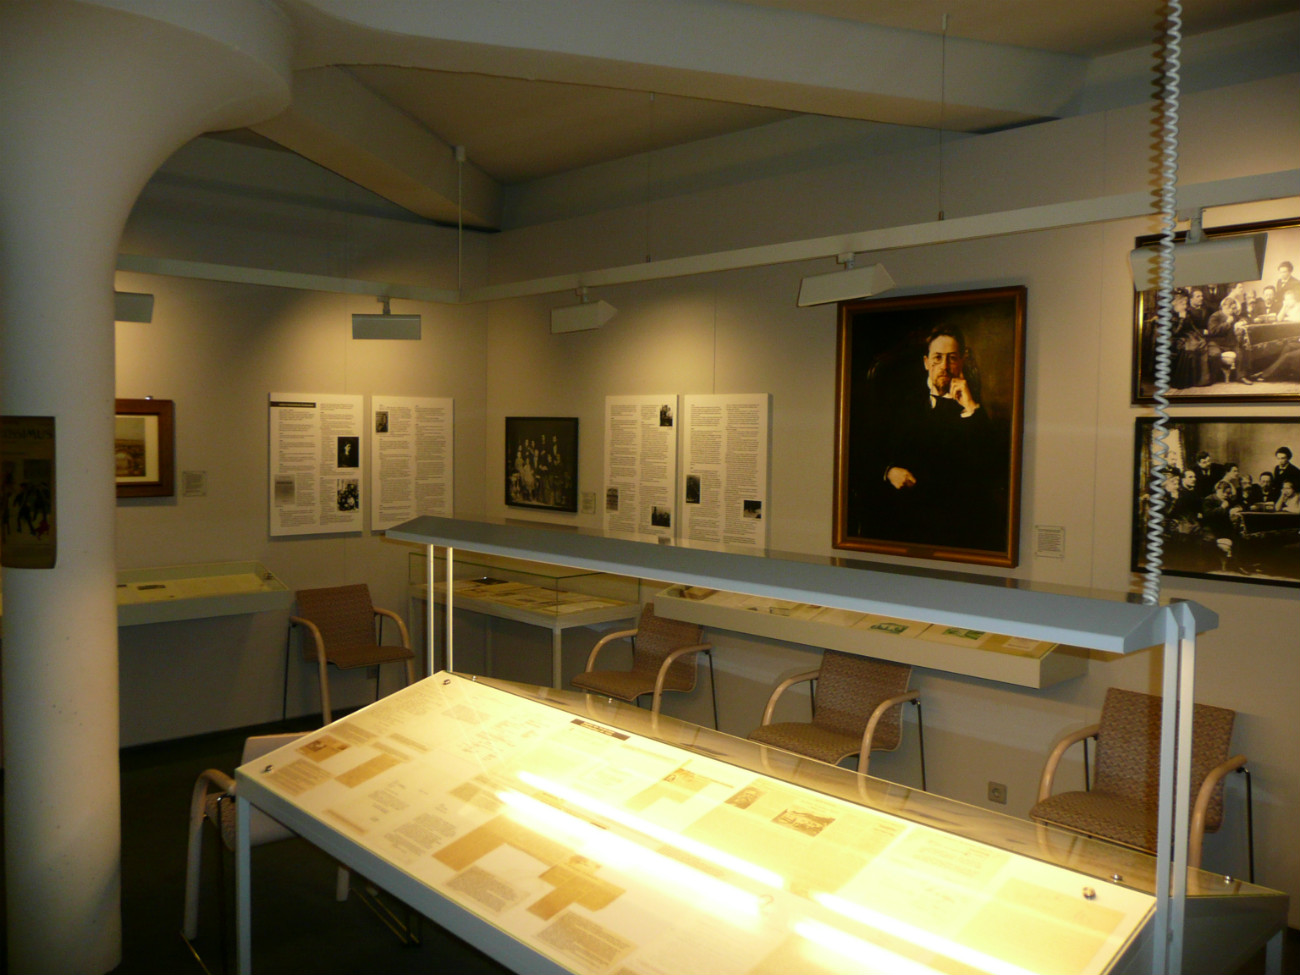 Literararym museum "Chekhov Salon" in Badenweiler / Source: Brücke-Osteuropa (public domain)